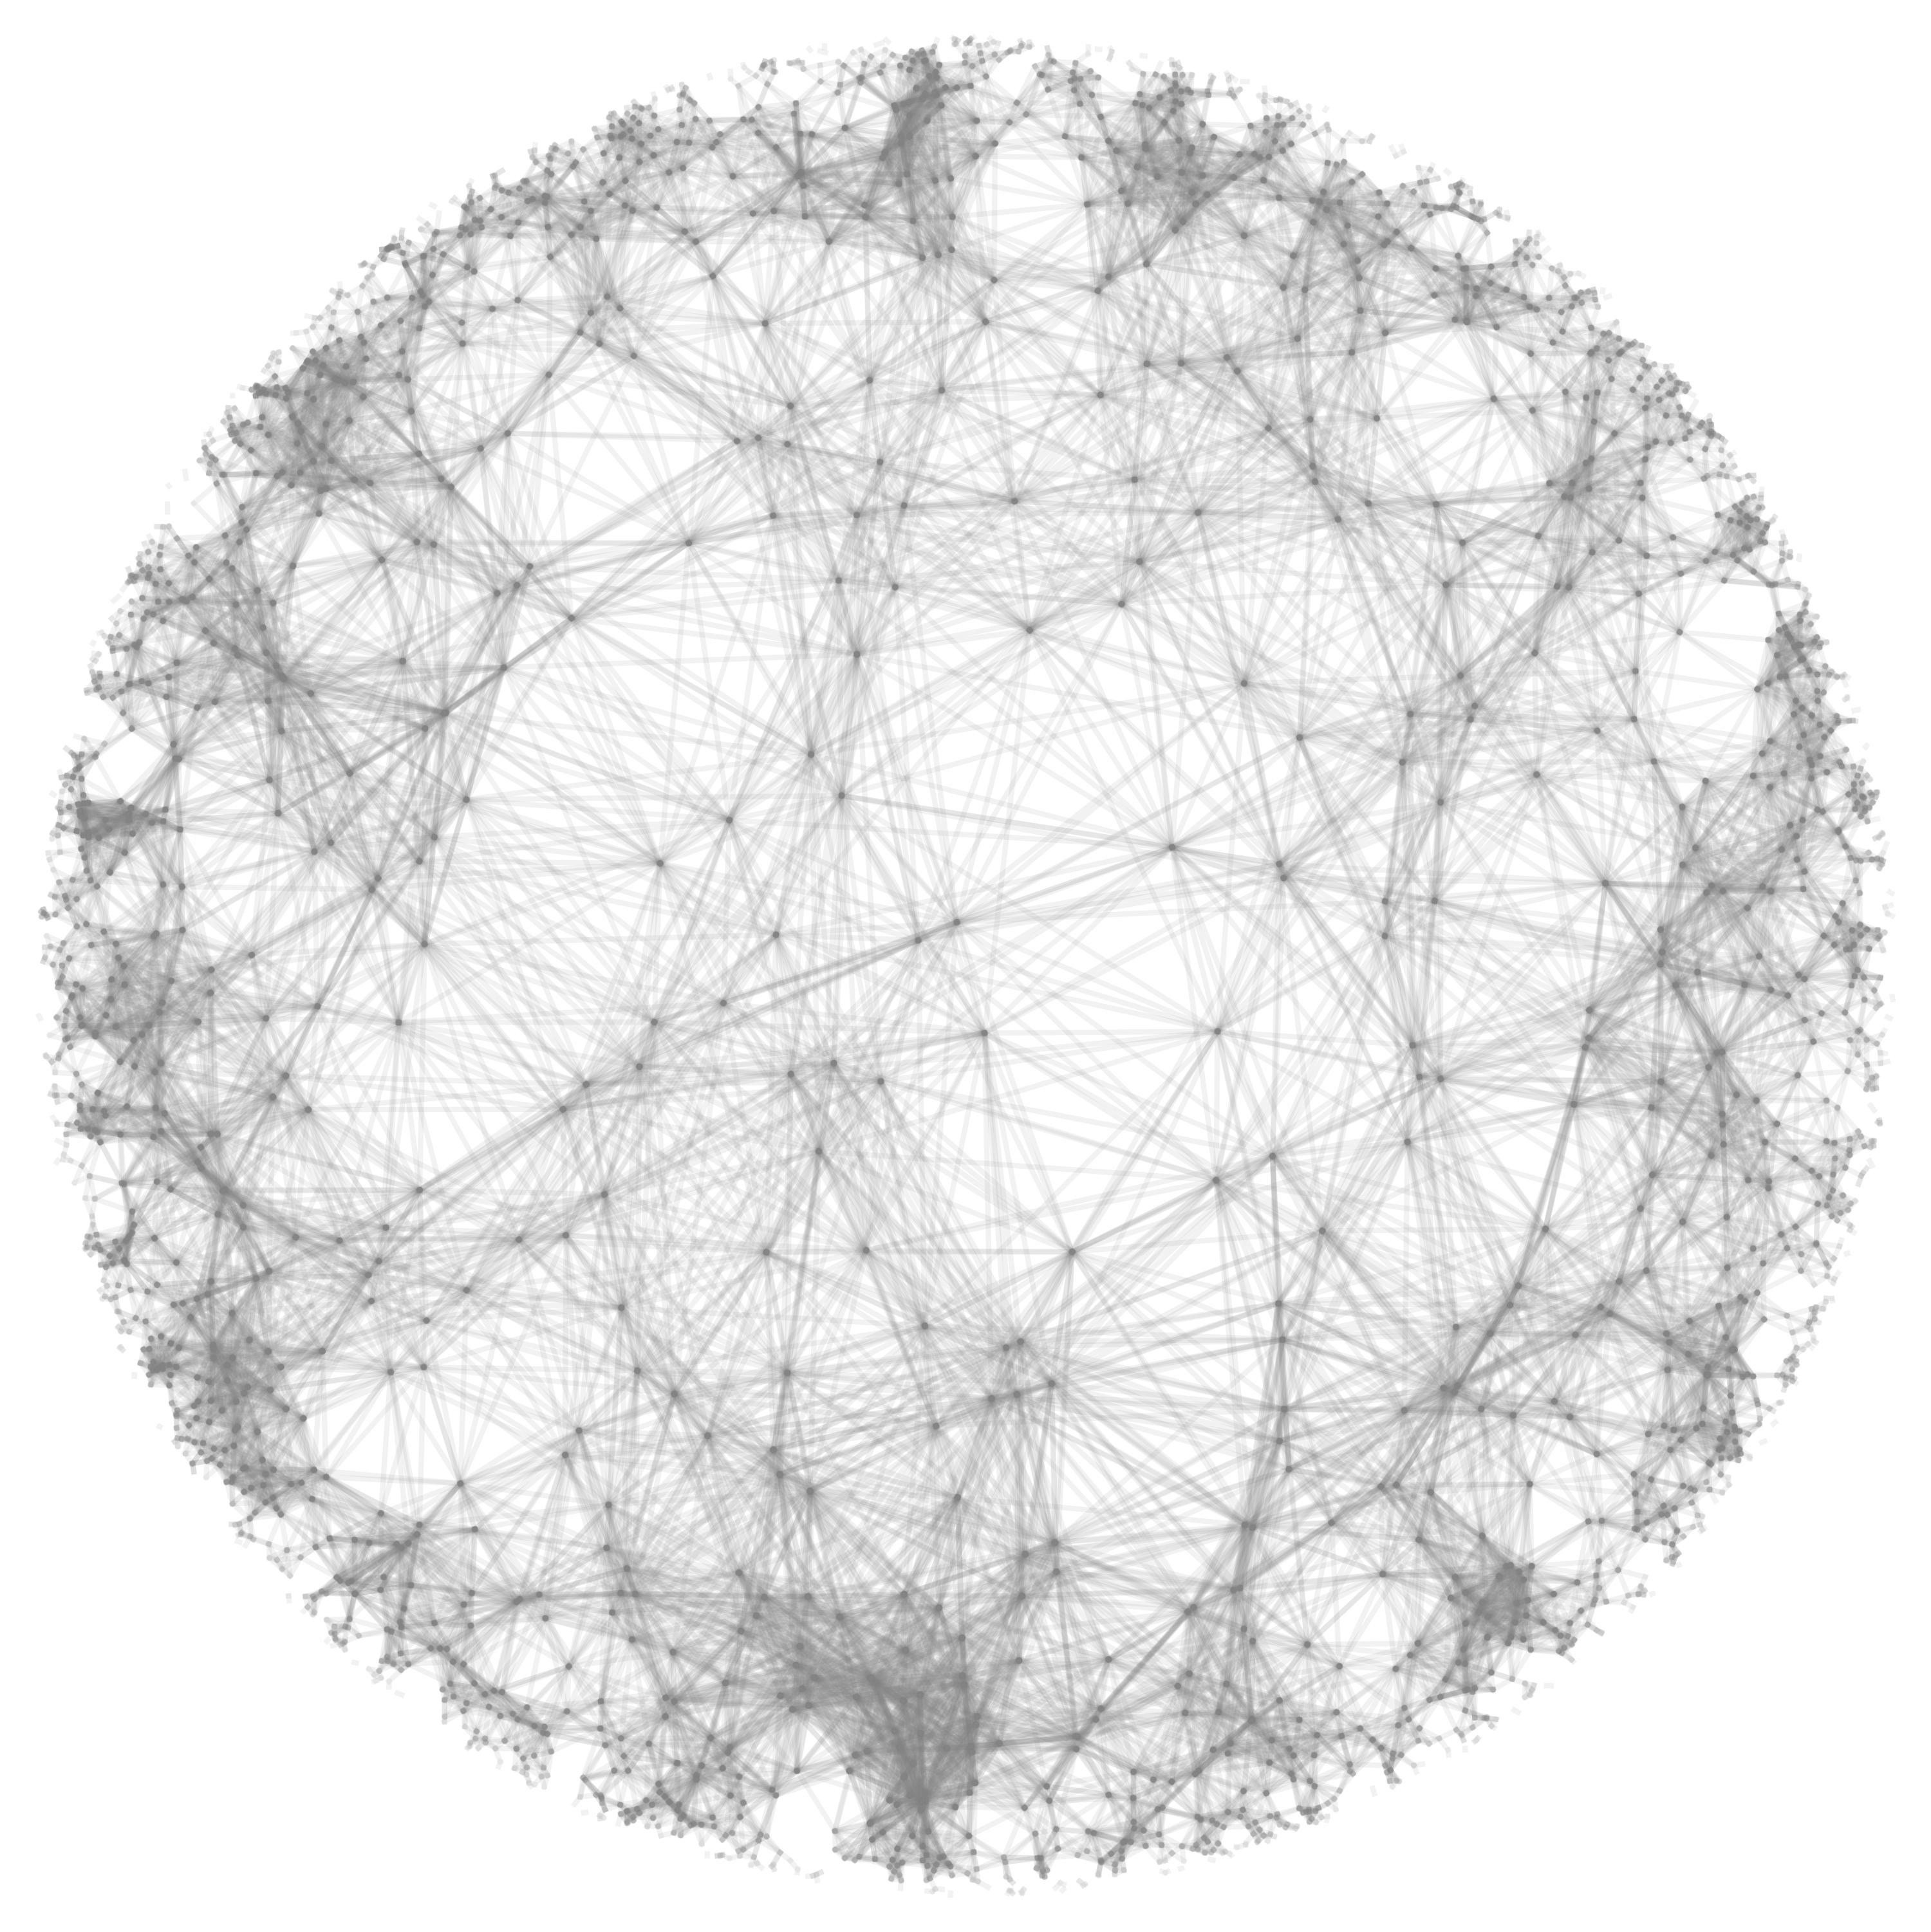 Hyperbolic random geometric graph